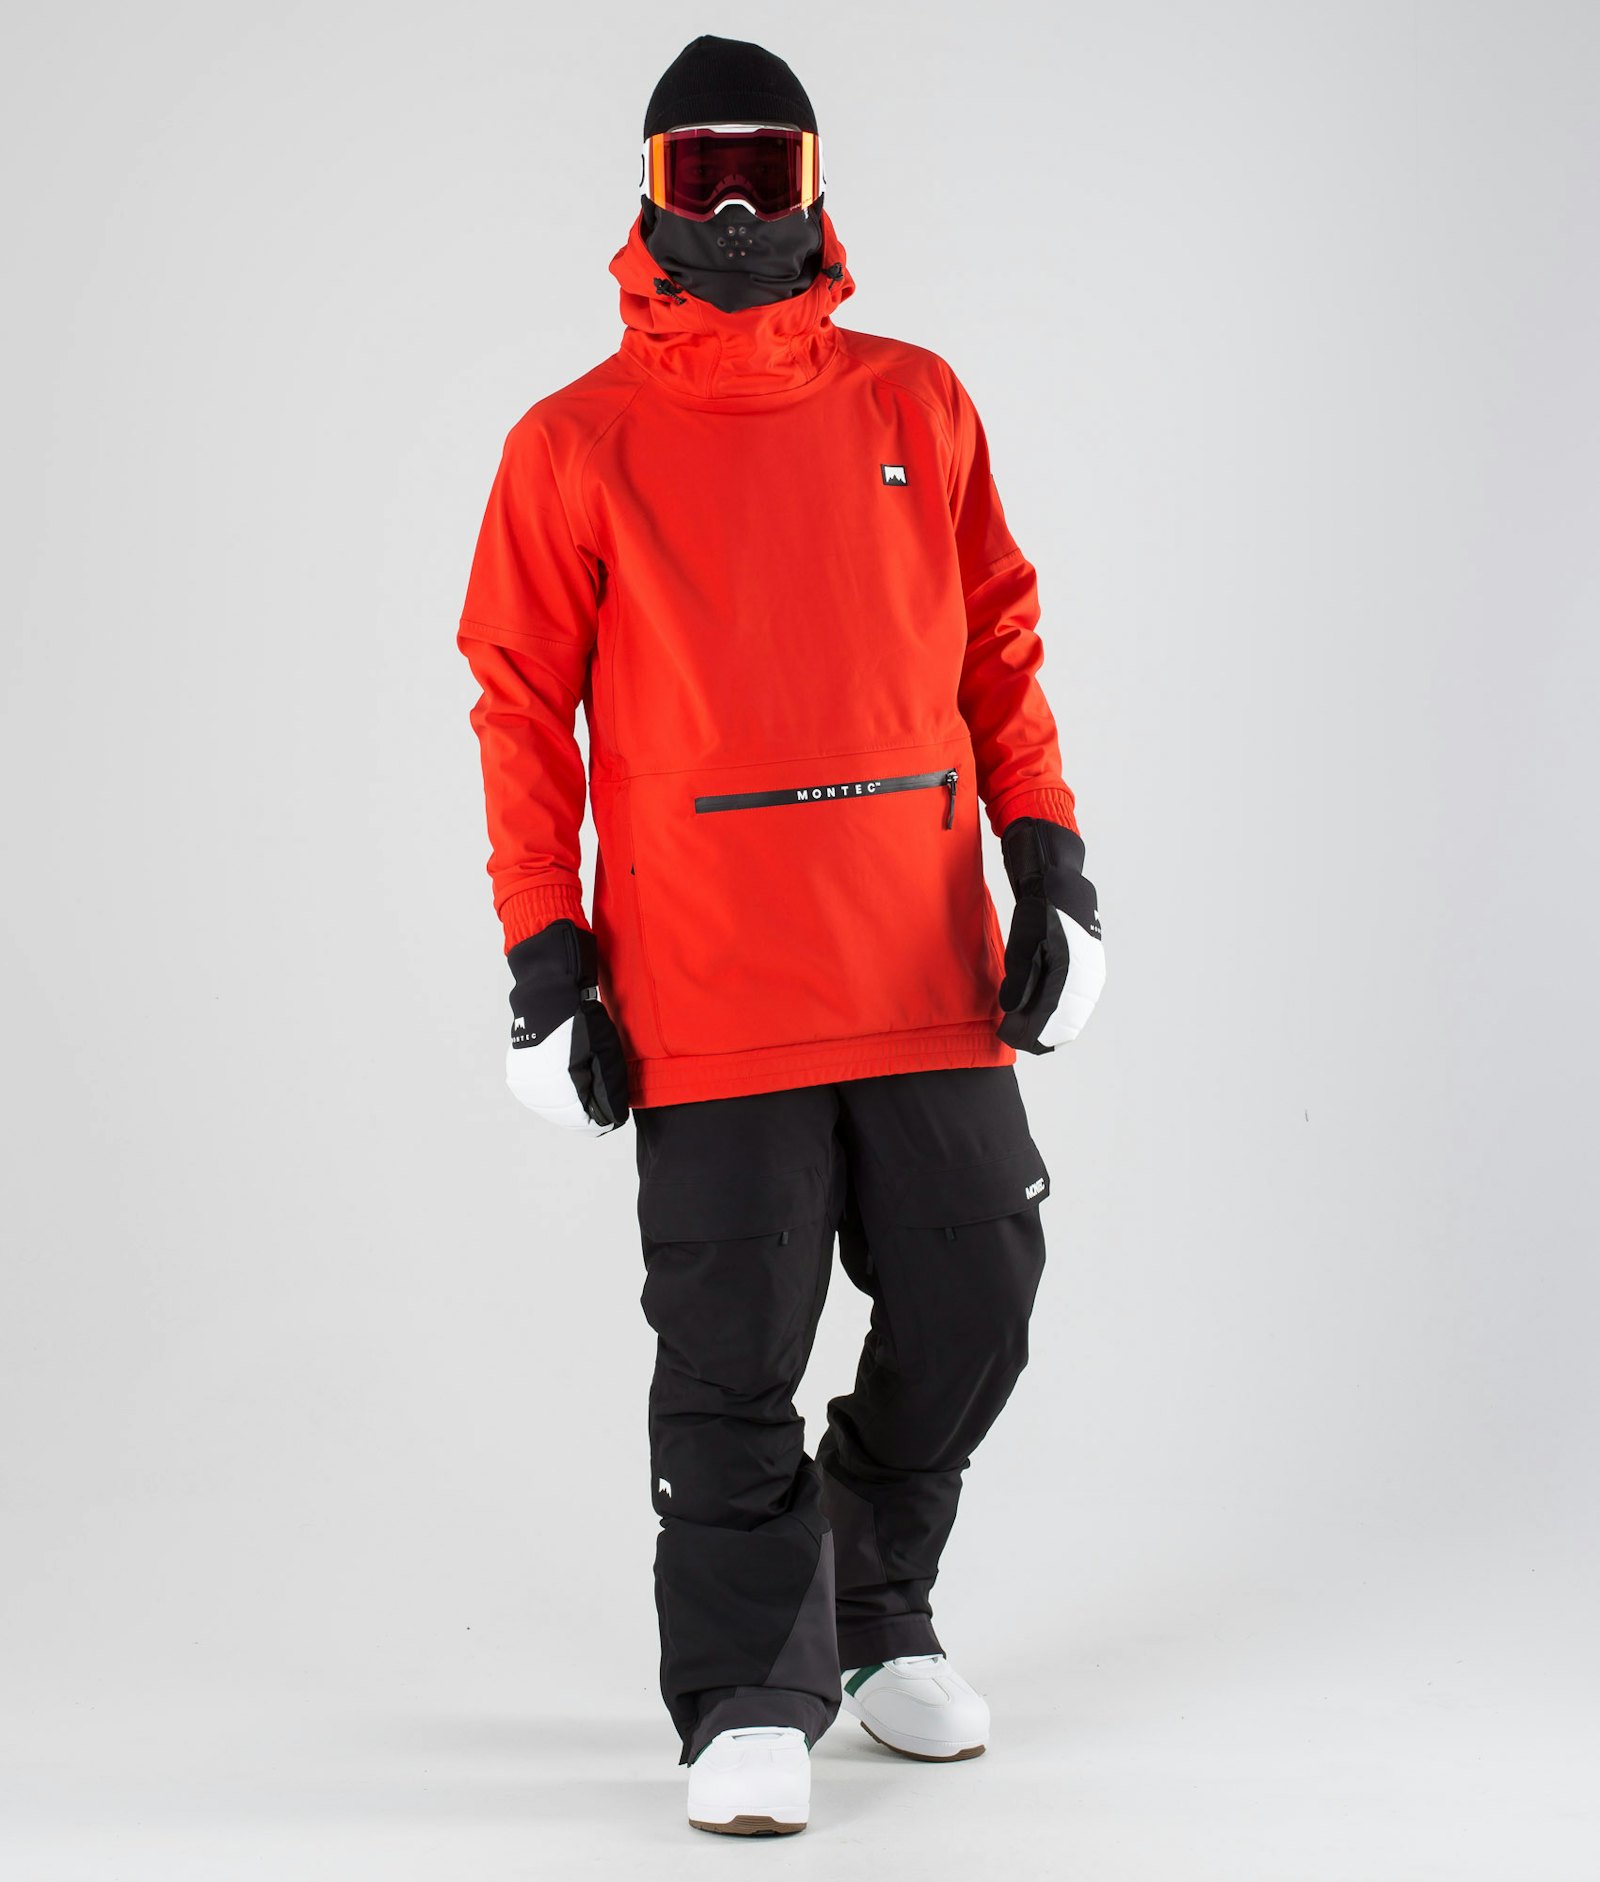 Tempest 2019 Snowboard Jacket Men Red